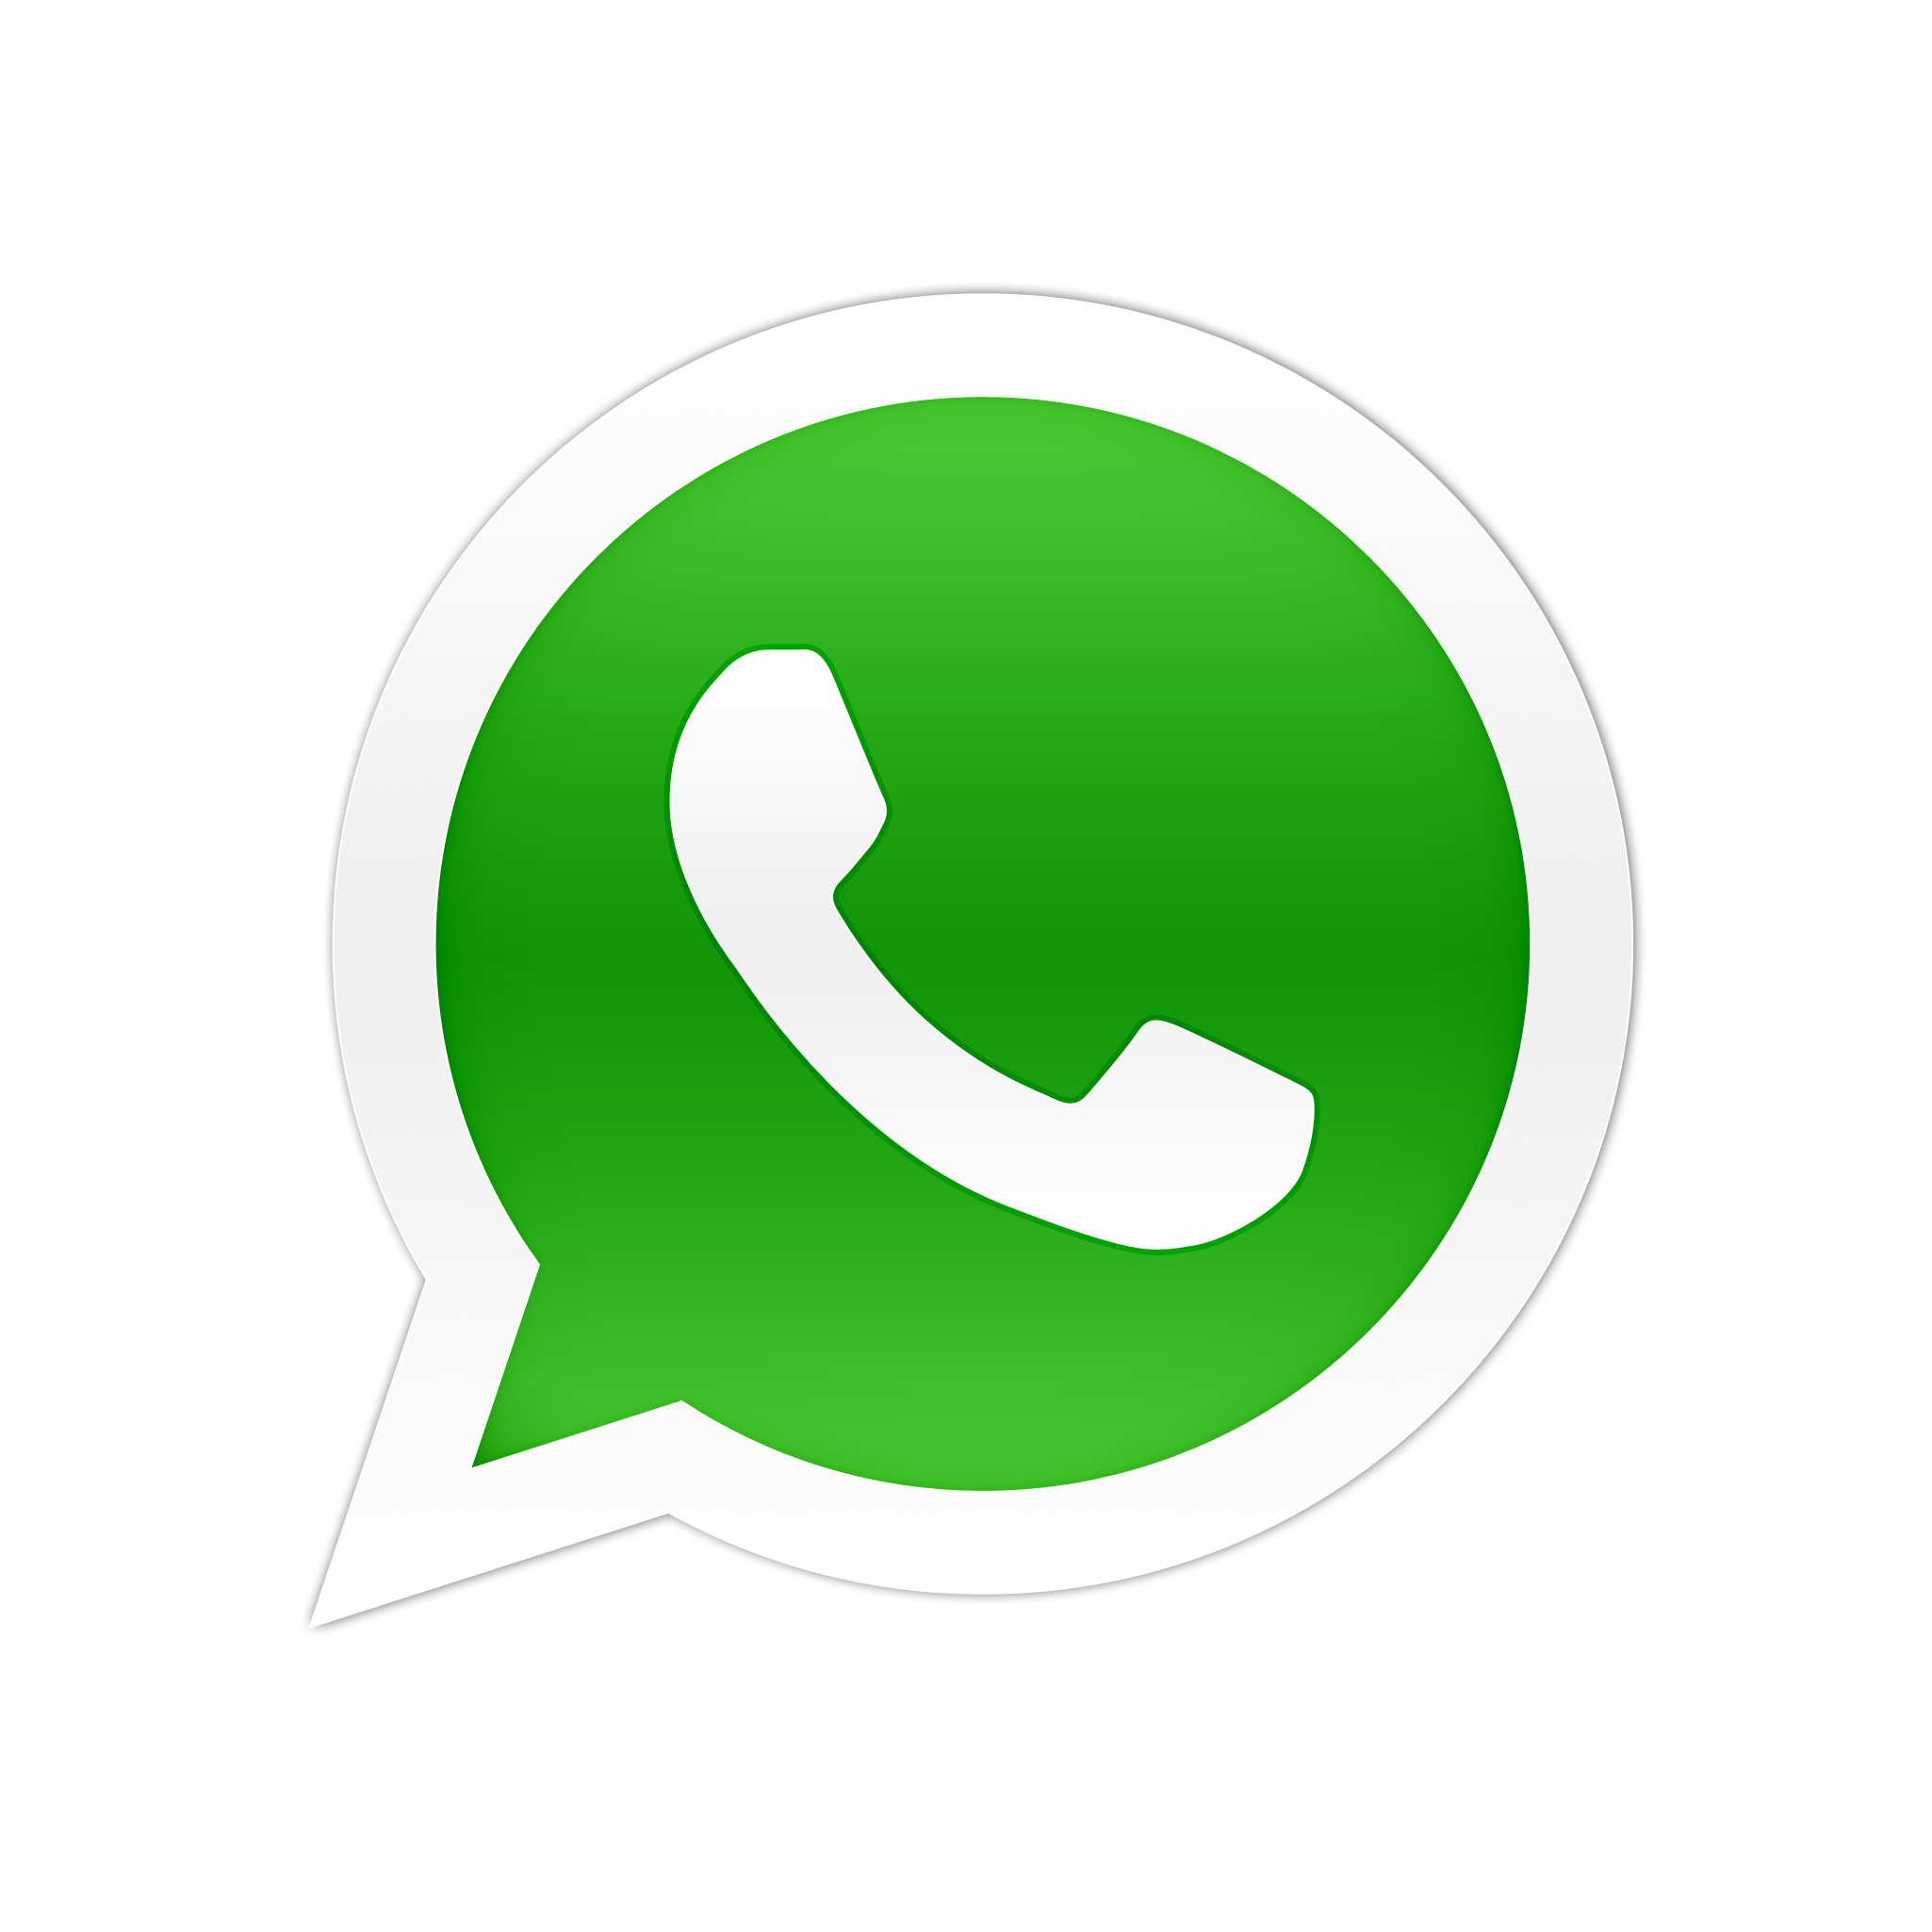 The Good Lie Icon Logo Whatsapp Whatsapp Logos Download